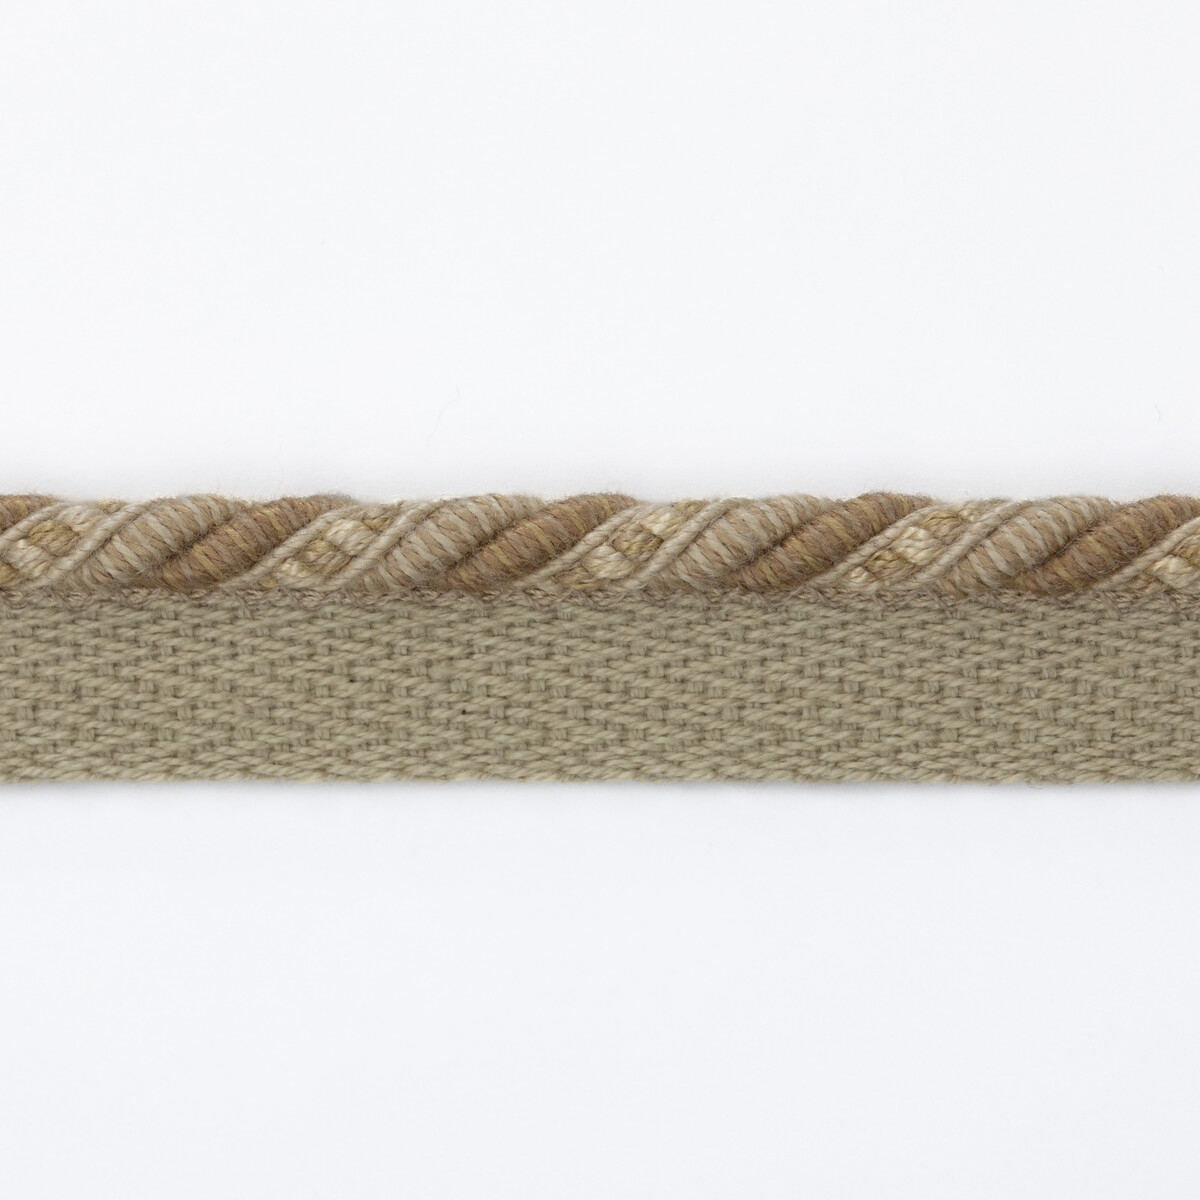 G P & J Baker T6032.118.0 Perandor Small Cord (flange) Trim Fabric in Cream/beige